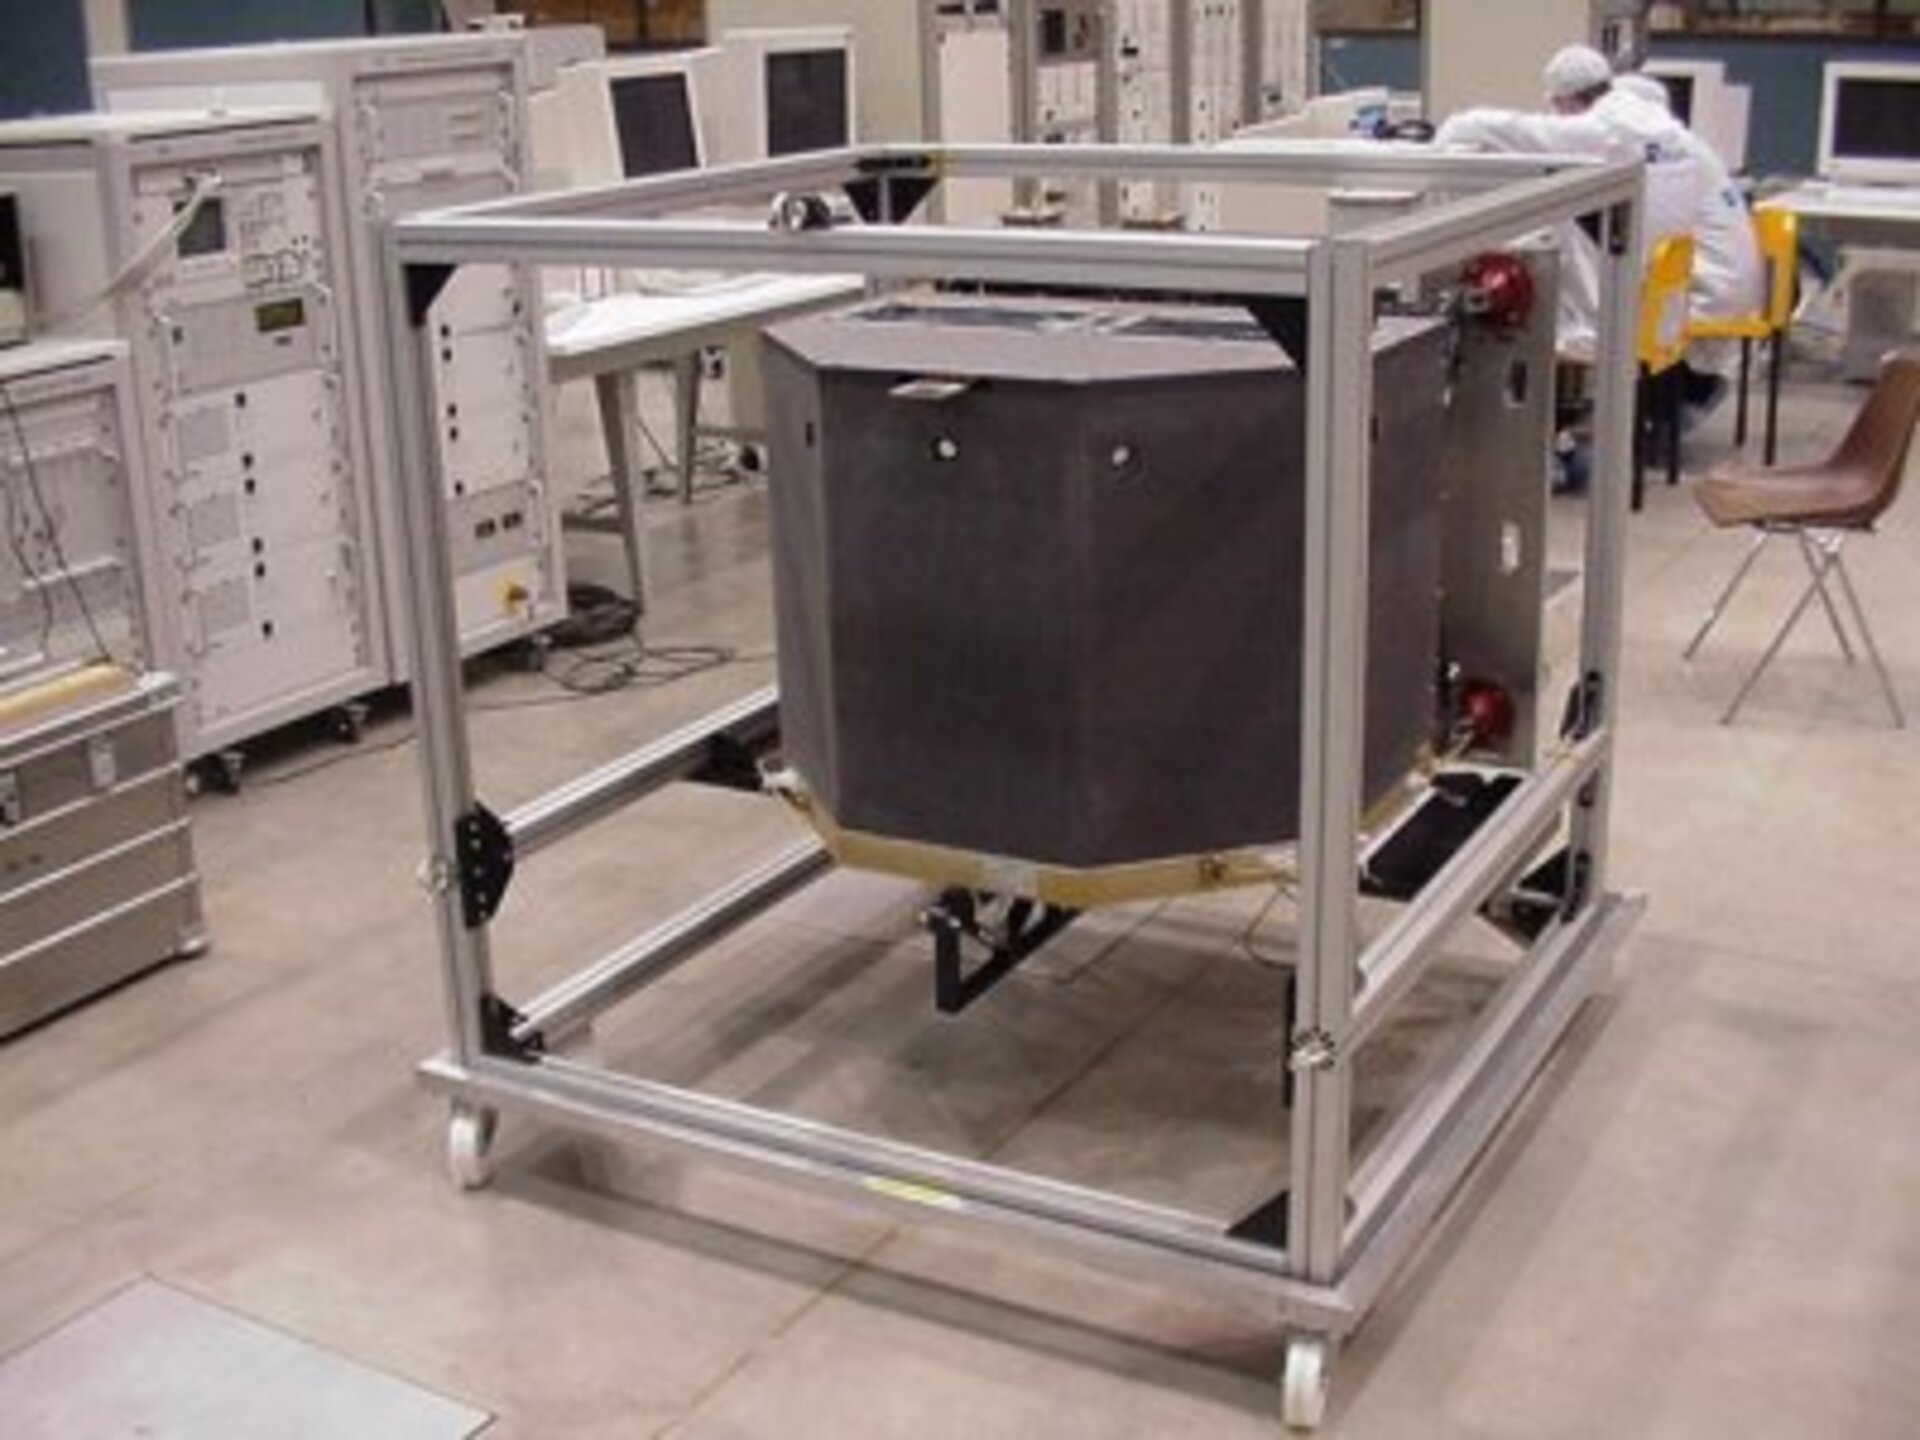 The Rosetta Lander Electrical Qualification Model (EQM)